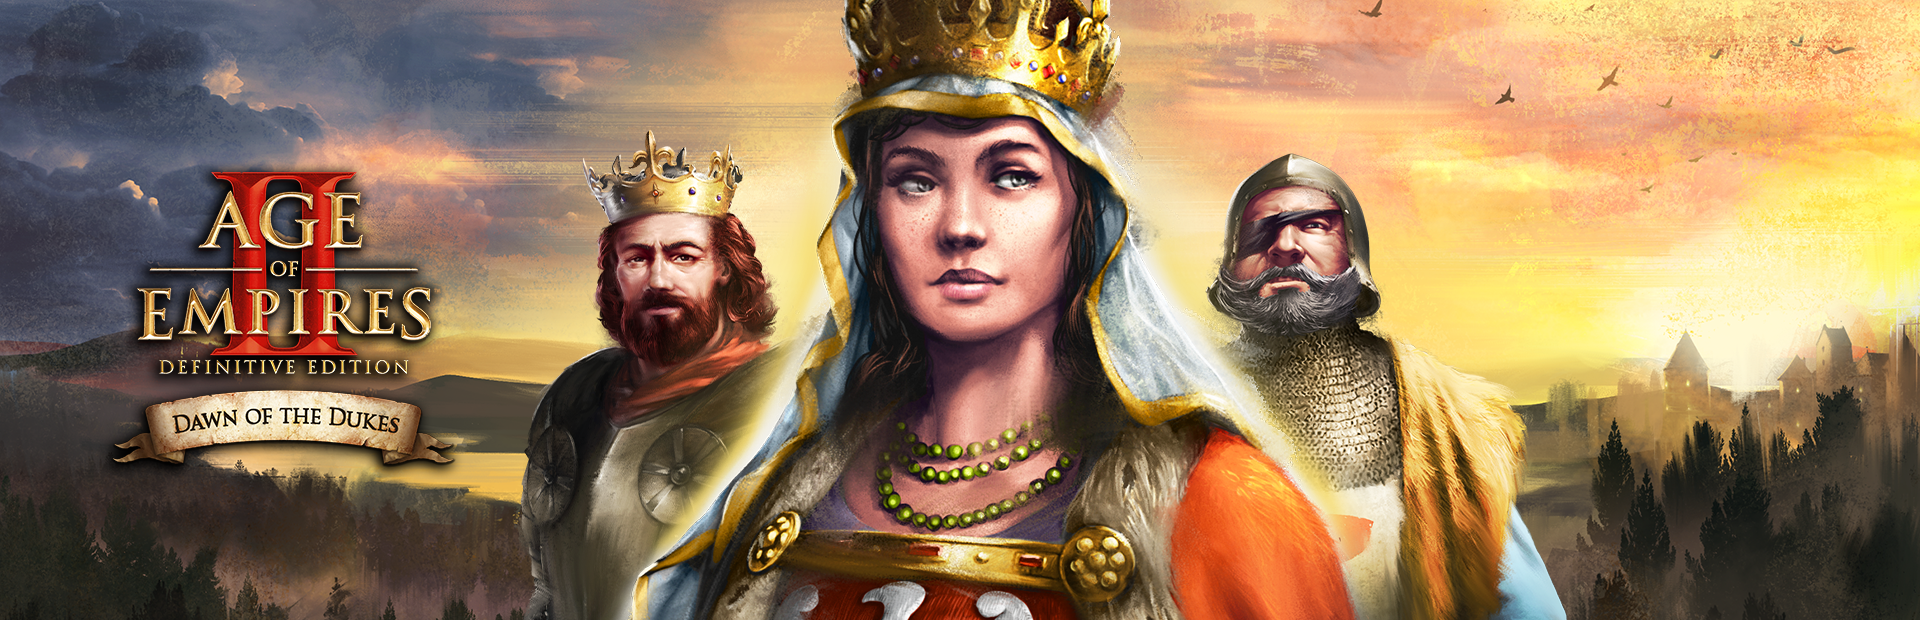 Video For Das neue Age of Empires II: Definitive Edition DLC Dawn of the Dukes erscheint am 10. August